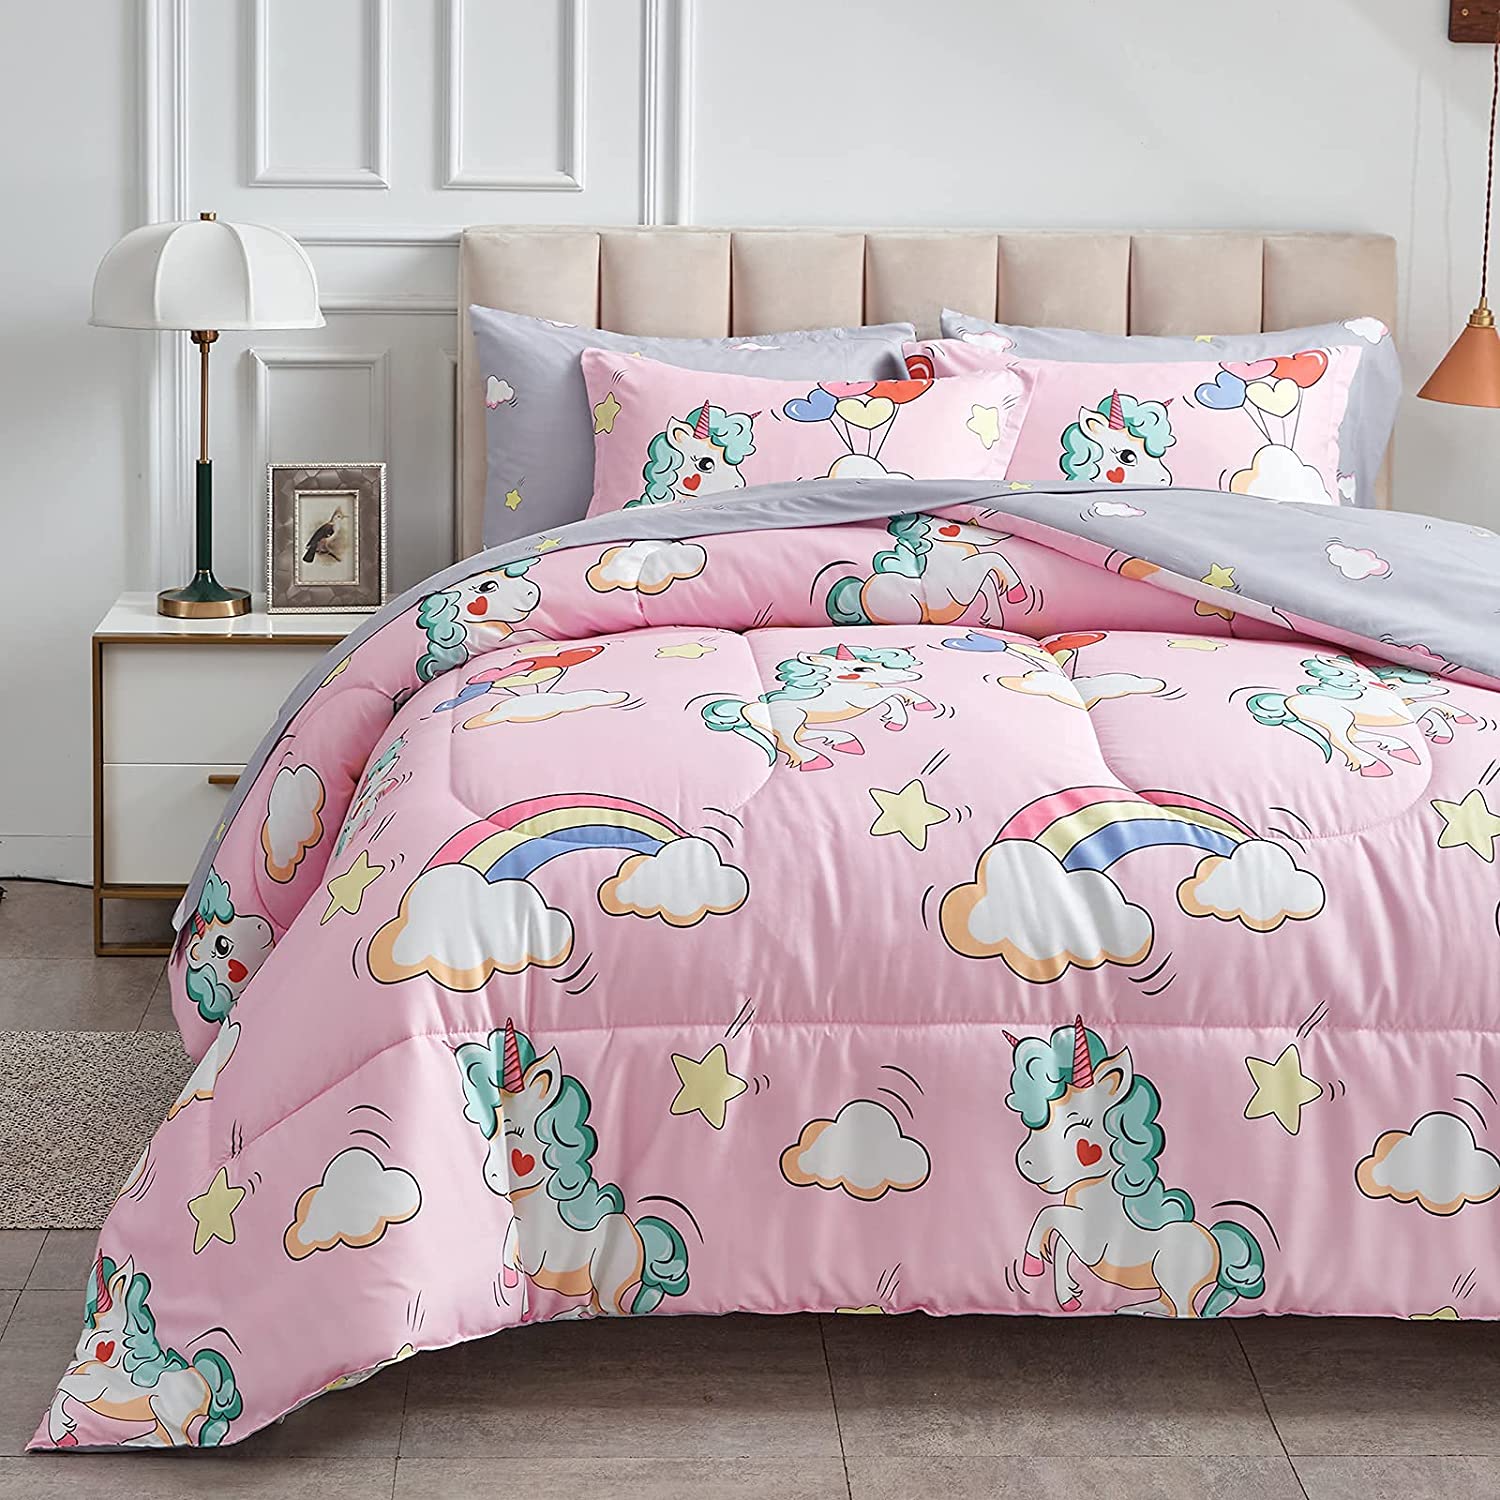 Pink Twin Kids Bedding Set Sheets Girls Comforter Rainbow Unicorn 5 Piece 